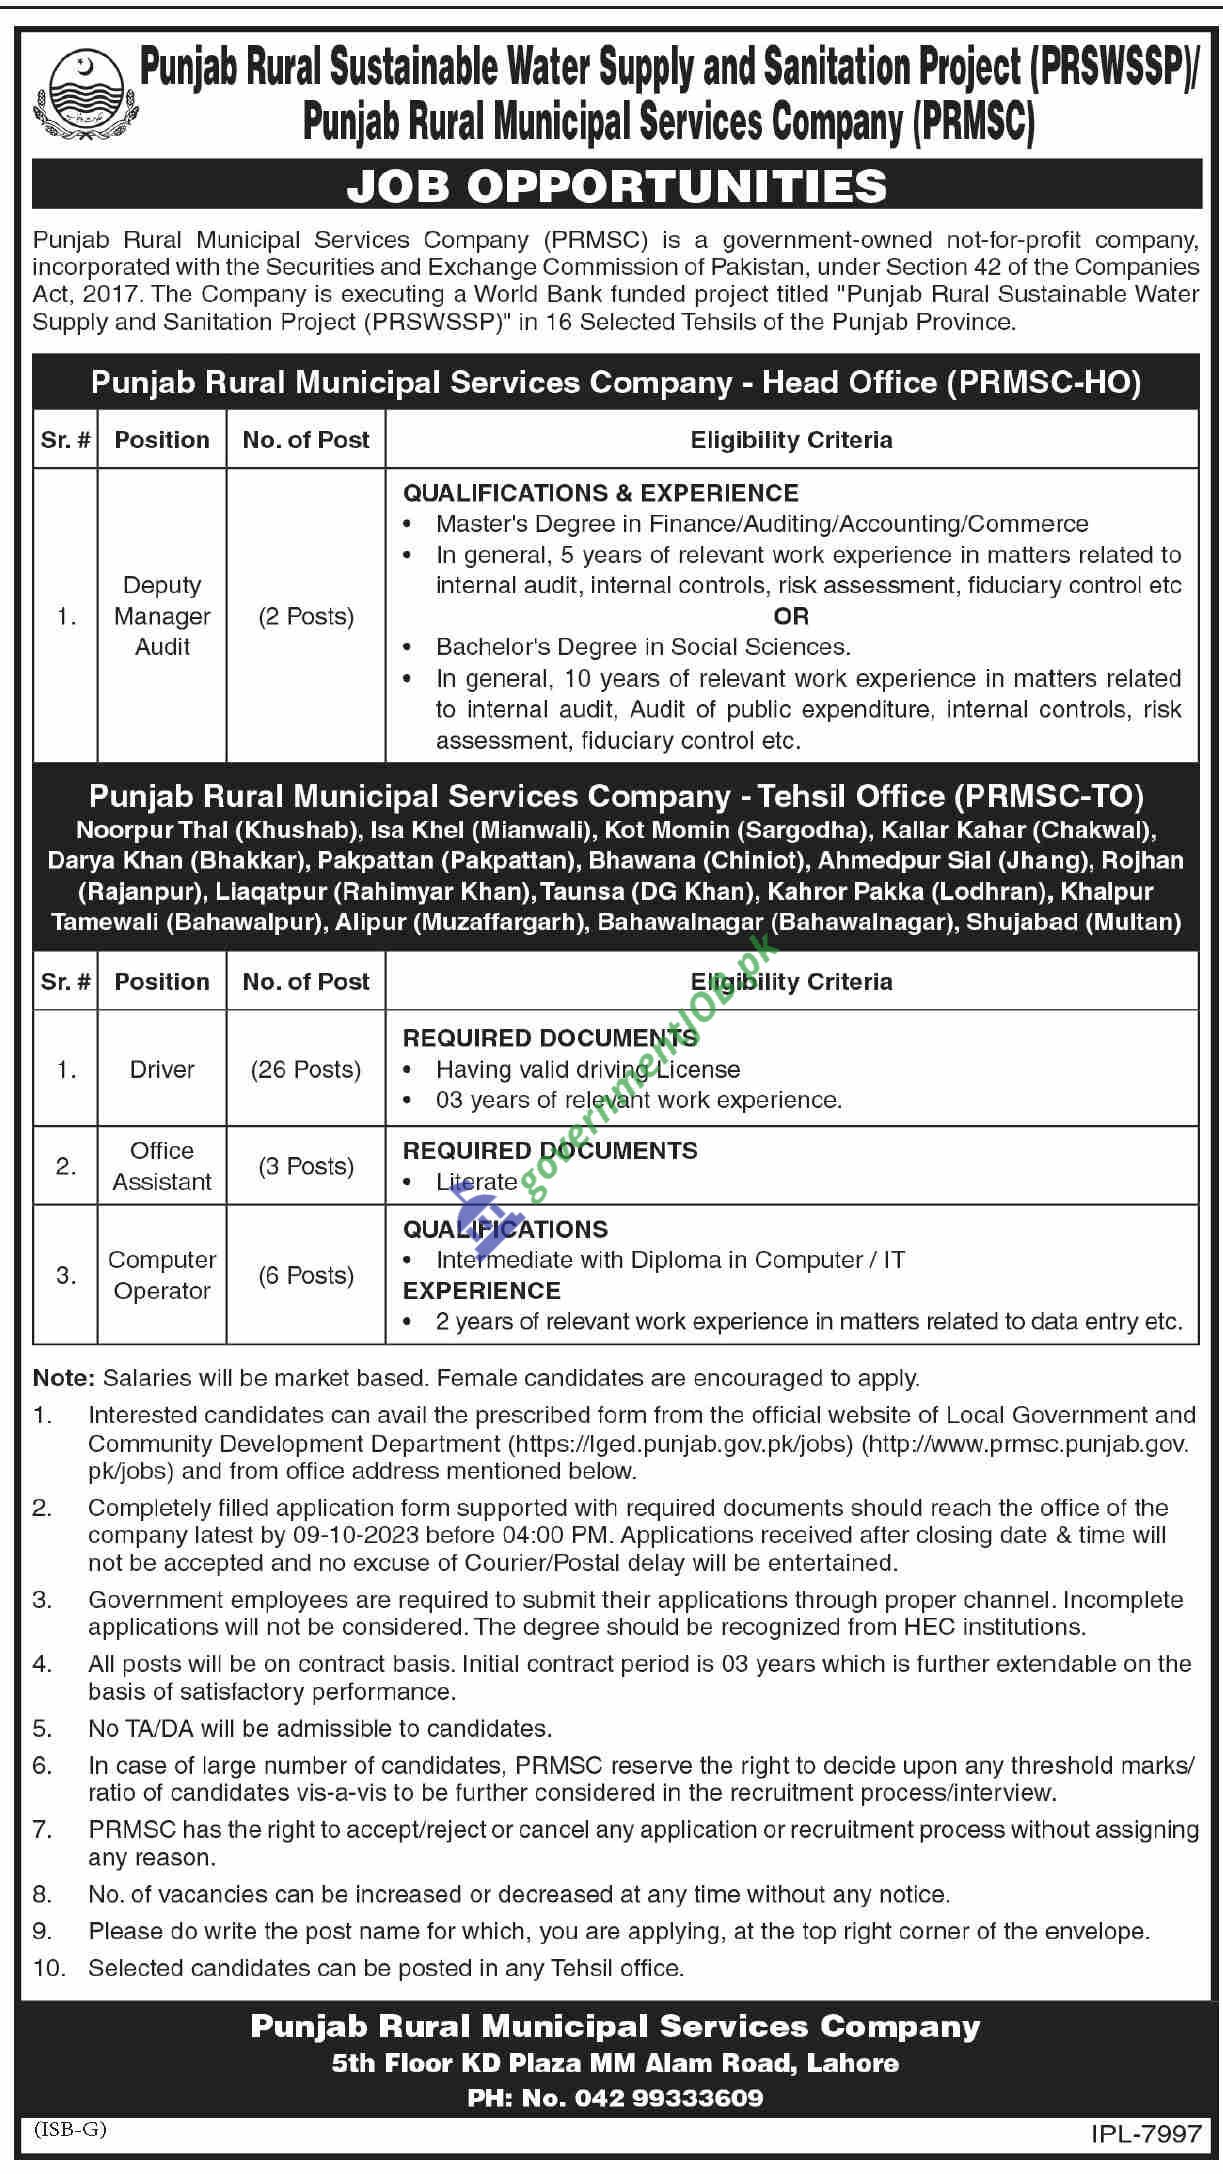 PRMSC Jobs 2023 - Punjab Rural Municipal Services Company